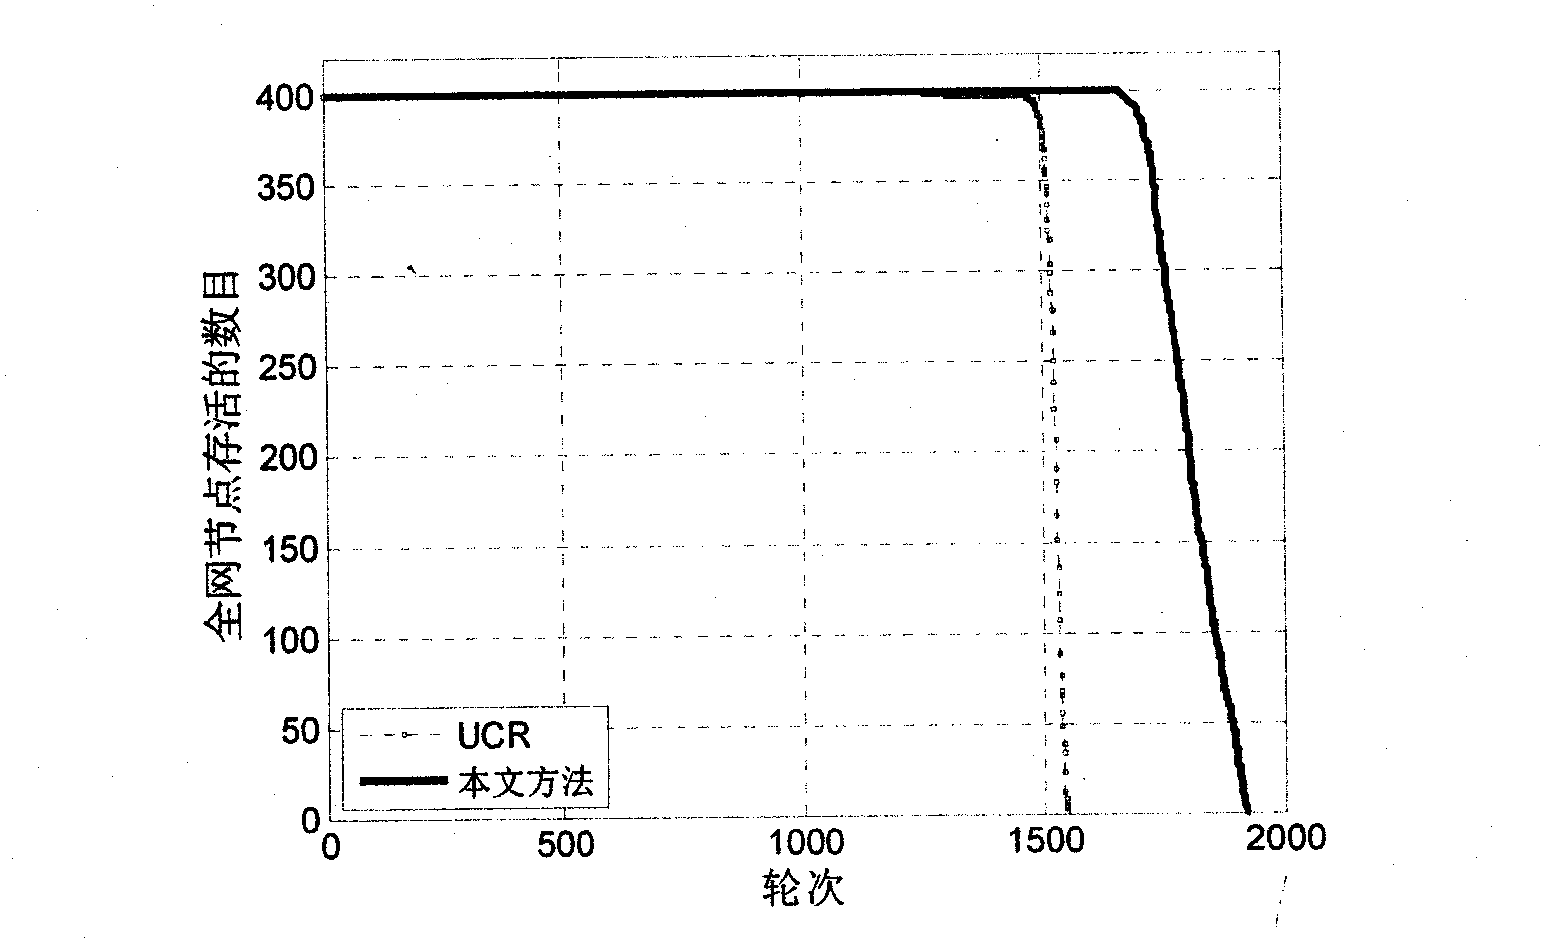 WSN (Wireless Sensor Network) distributed-type non-uniform clustering method